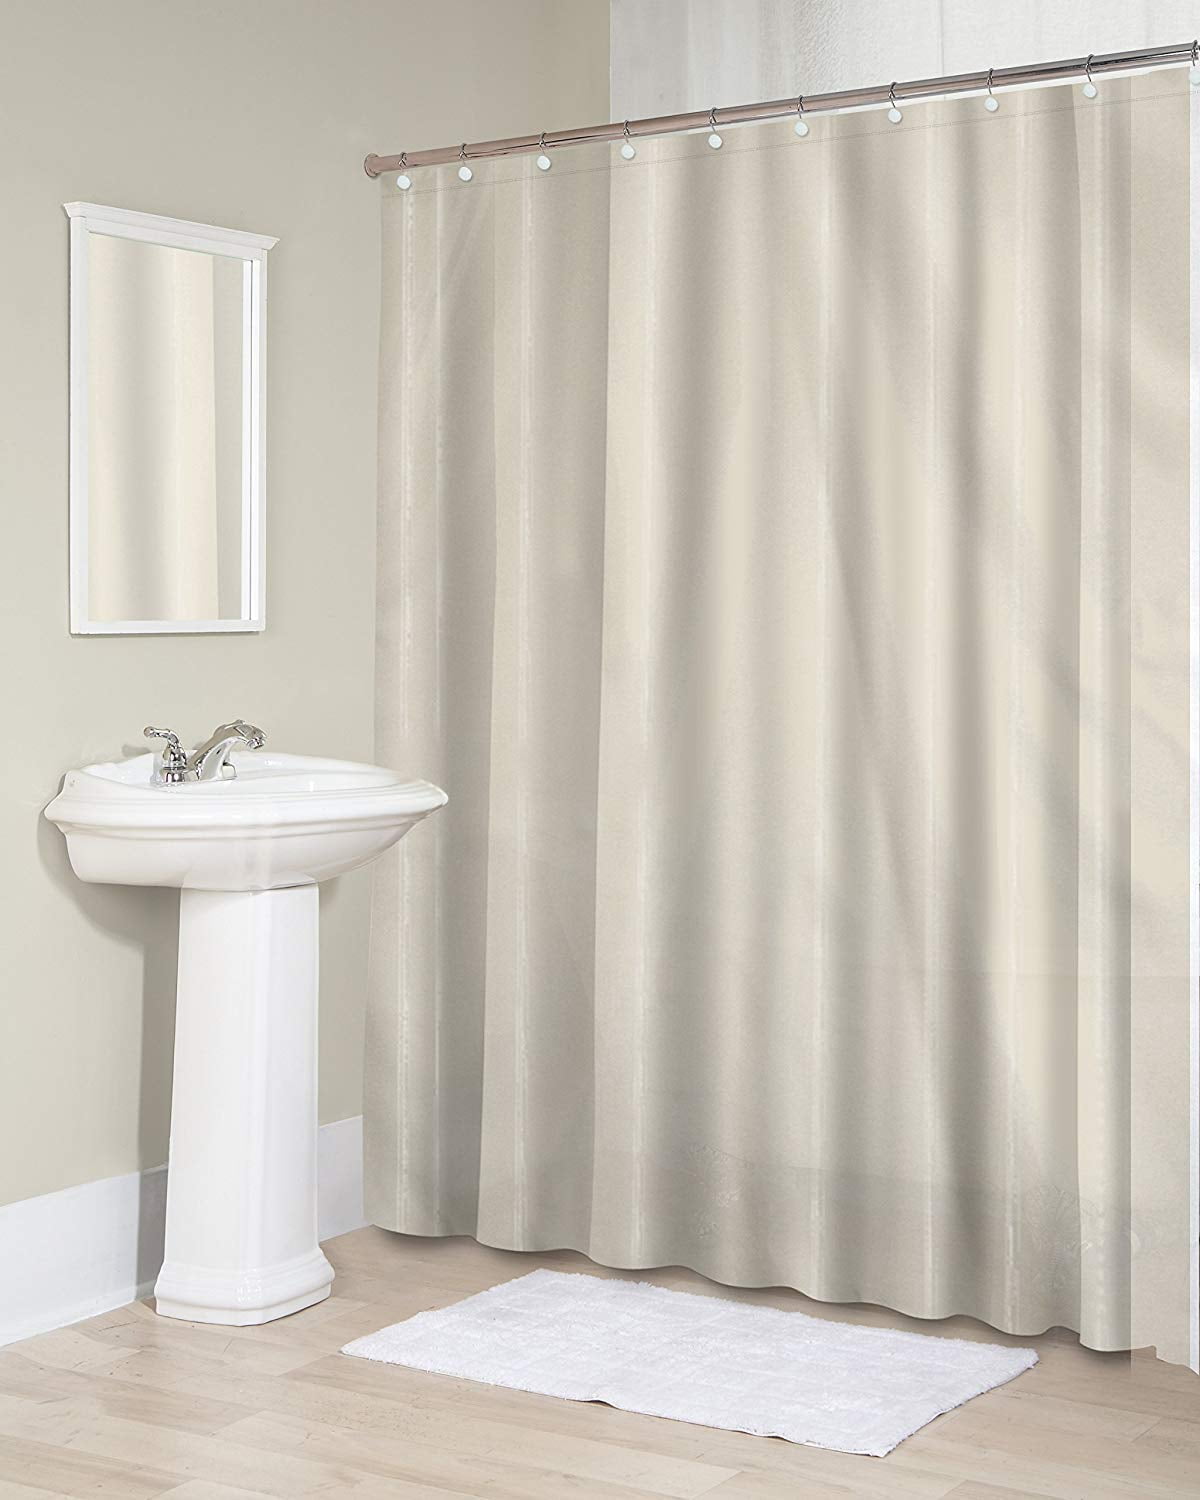 New Waterproof Home Bathroom PEVA Shower Curtain Panel Sheer Decor With Hooks 